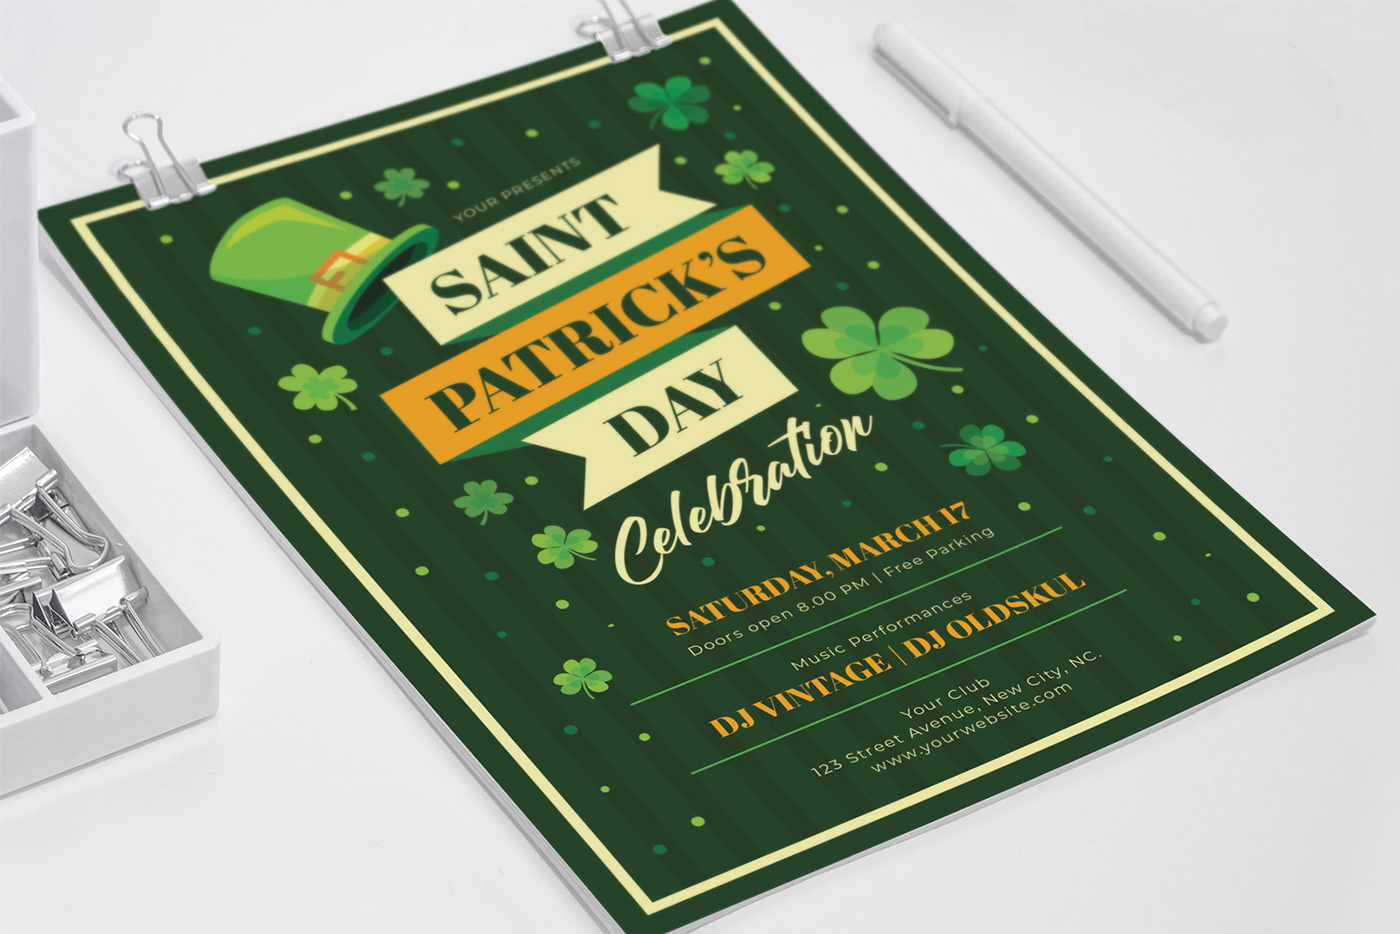 celebrations cultural feast festivals green parades Patrick public saint saint patrick